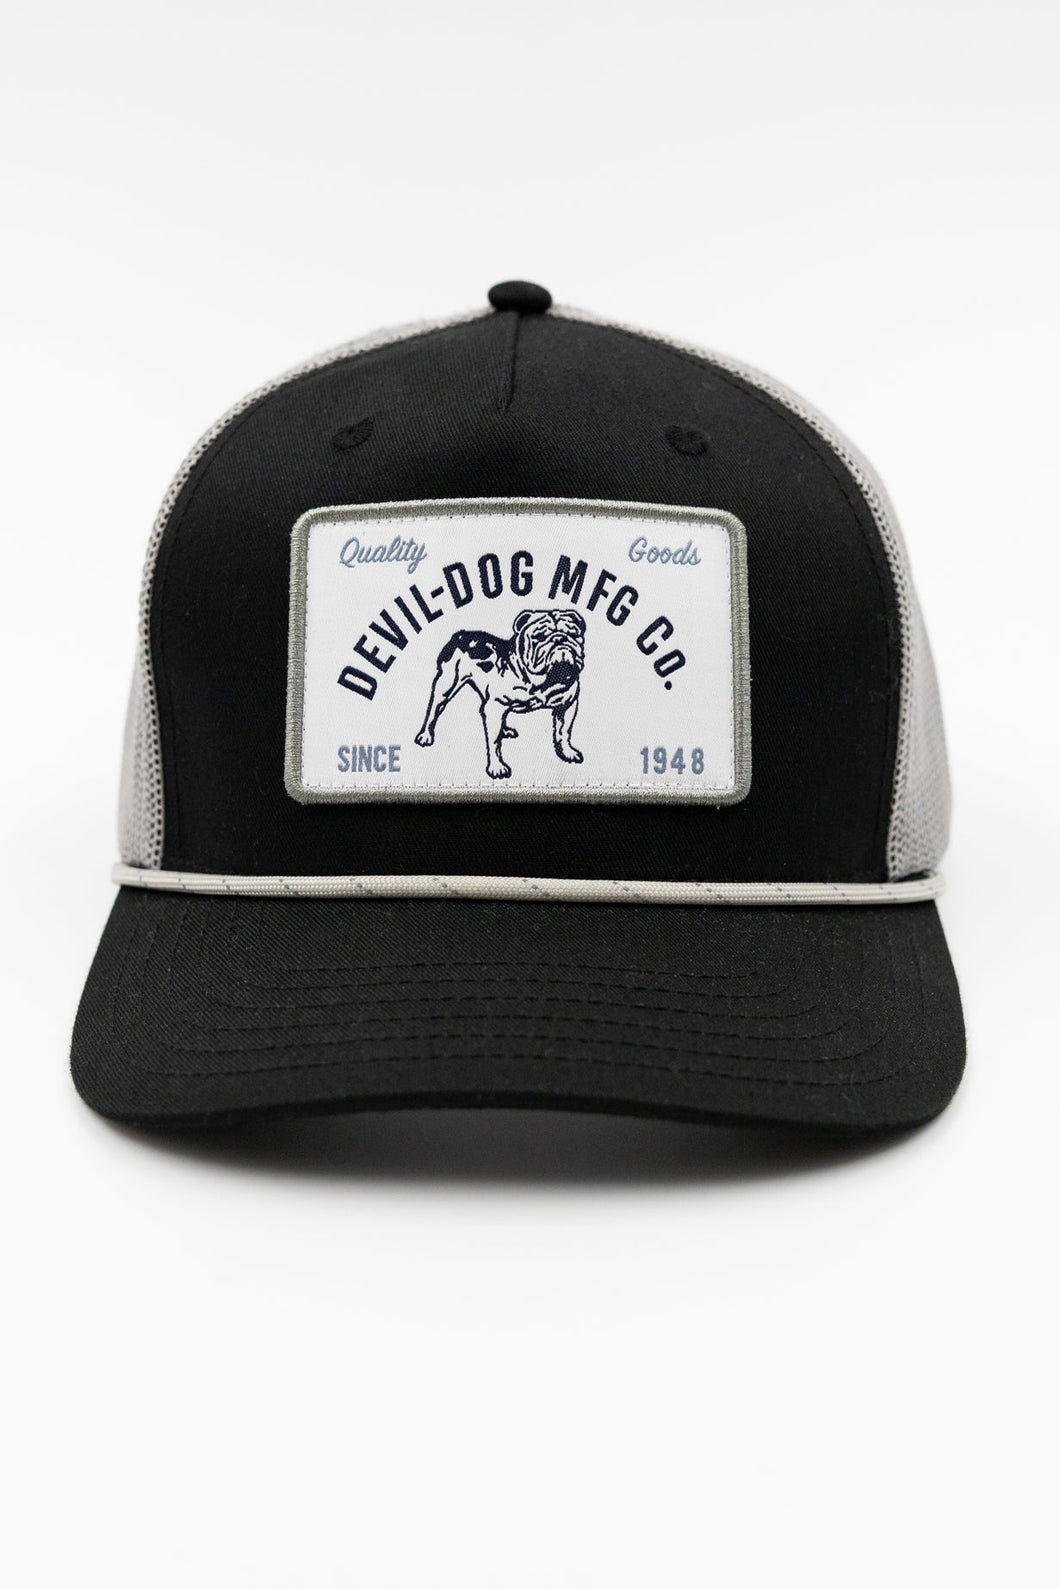 The Bulldog Trucker Hat